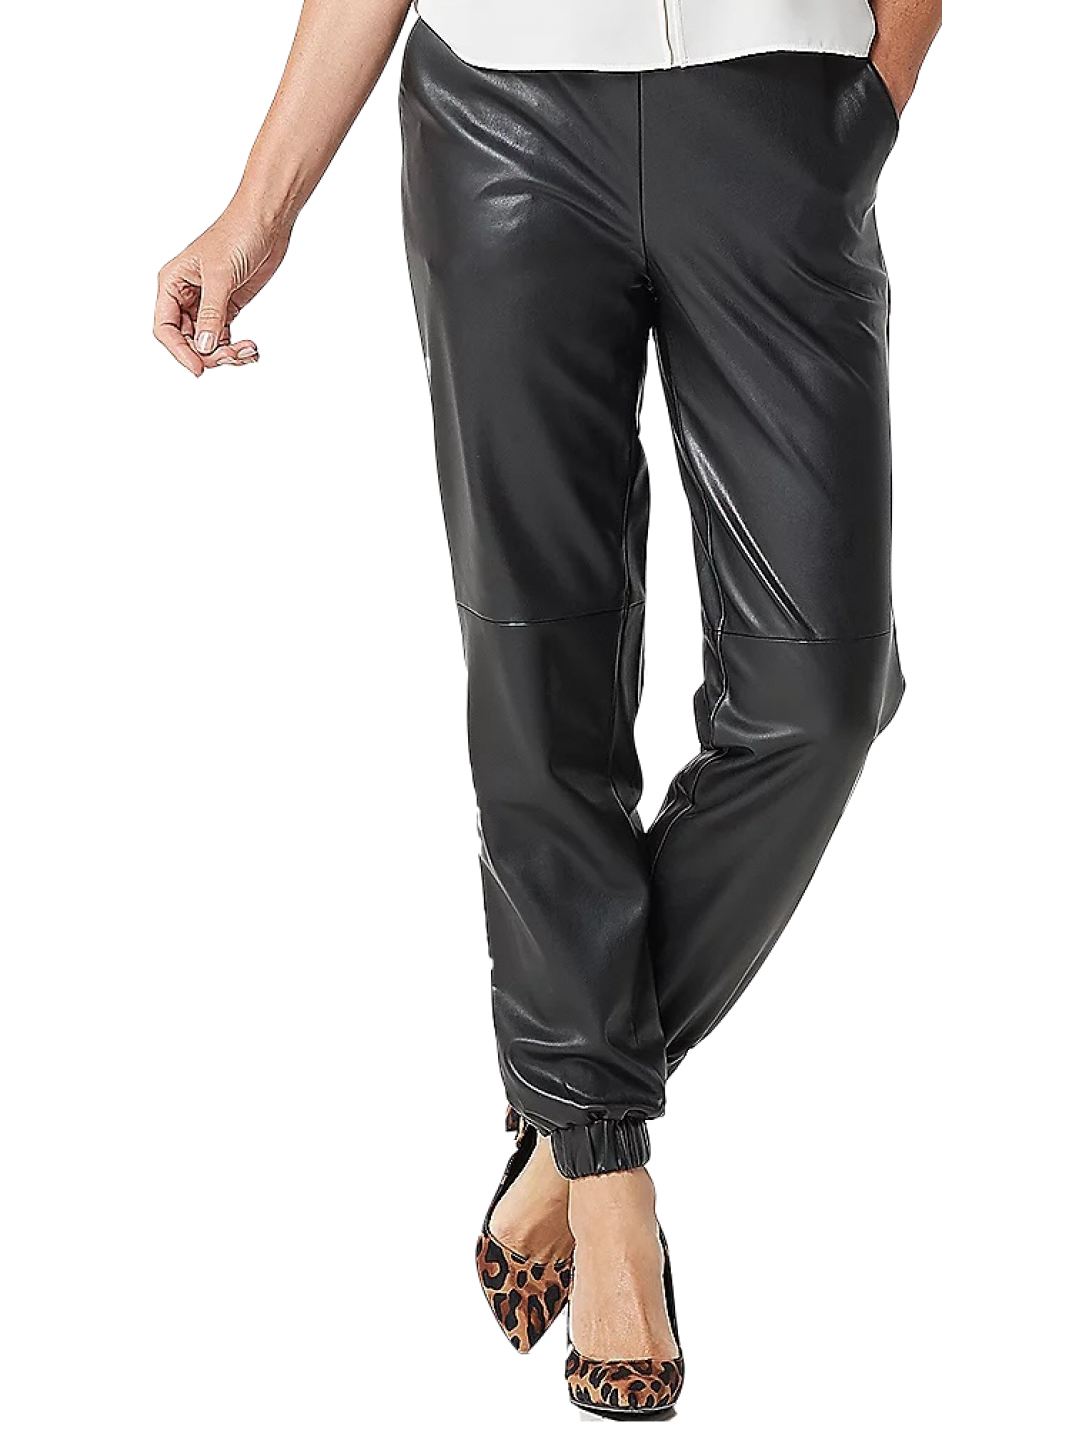 Ladies JOGGERS Black Lambskin Premium Real Leather Jogging Trouser Draw Pants 